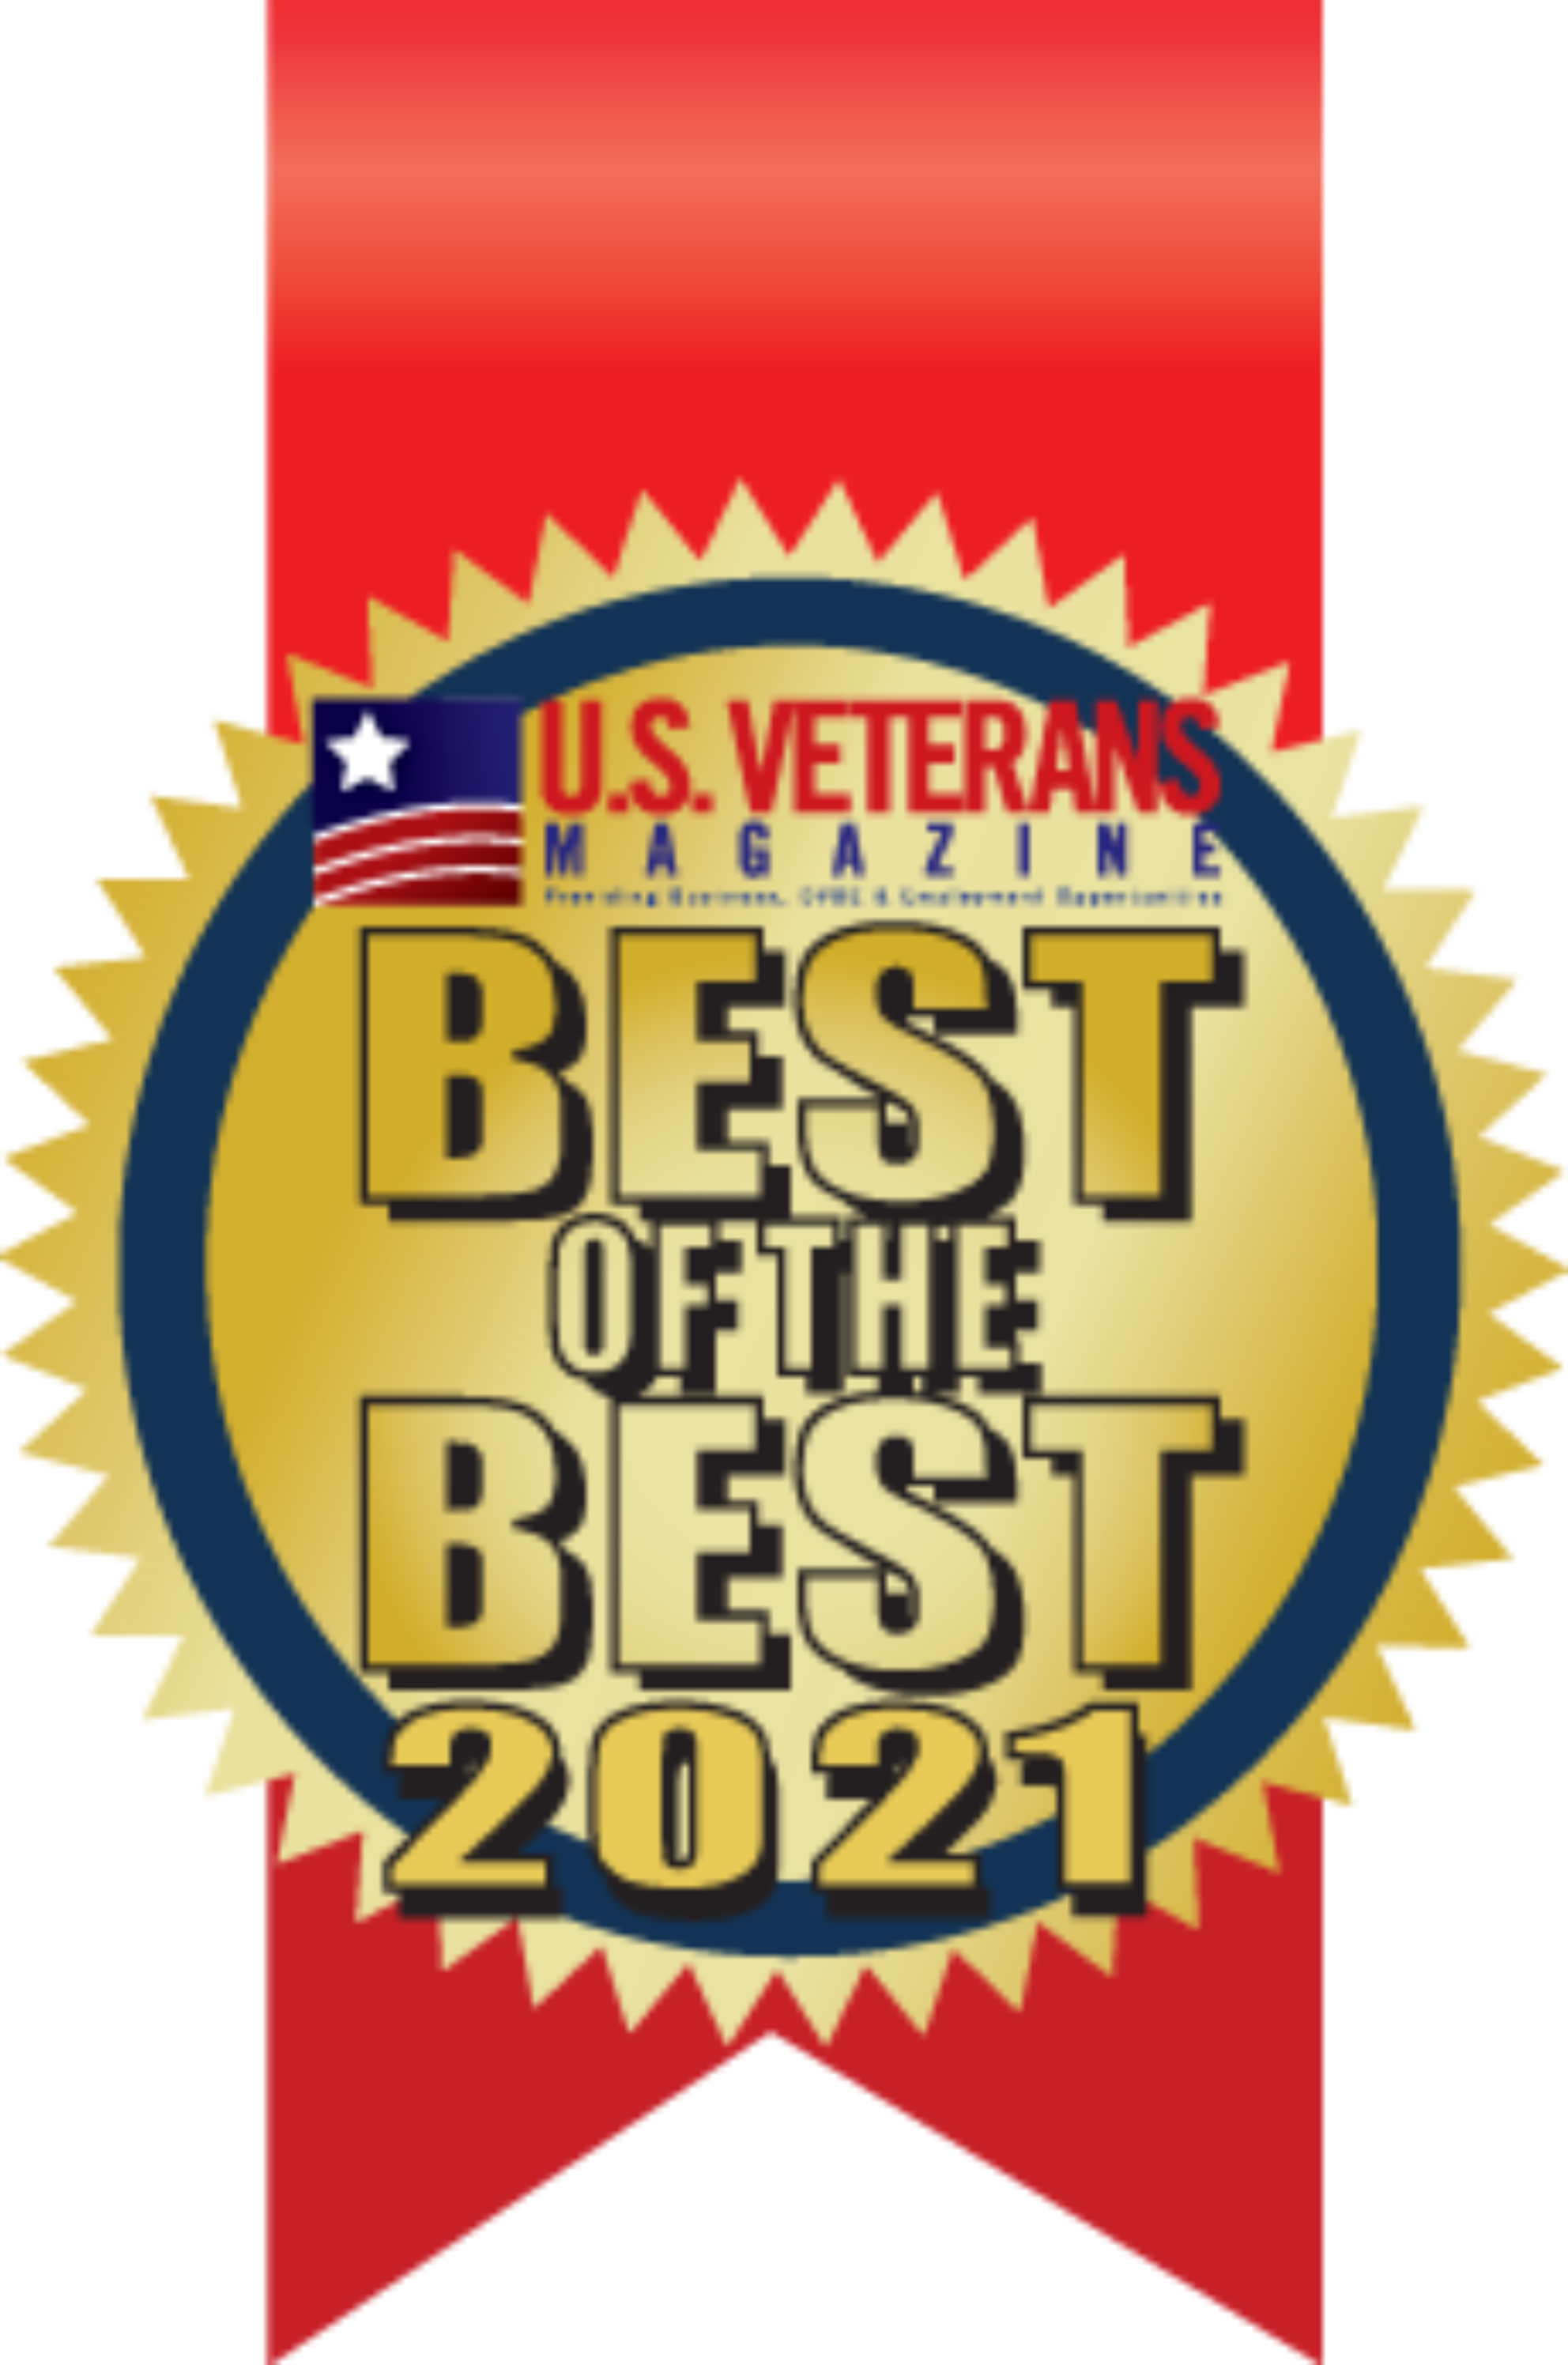 U.S. Veterans Magazine Best of the Best 2021 logo